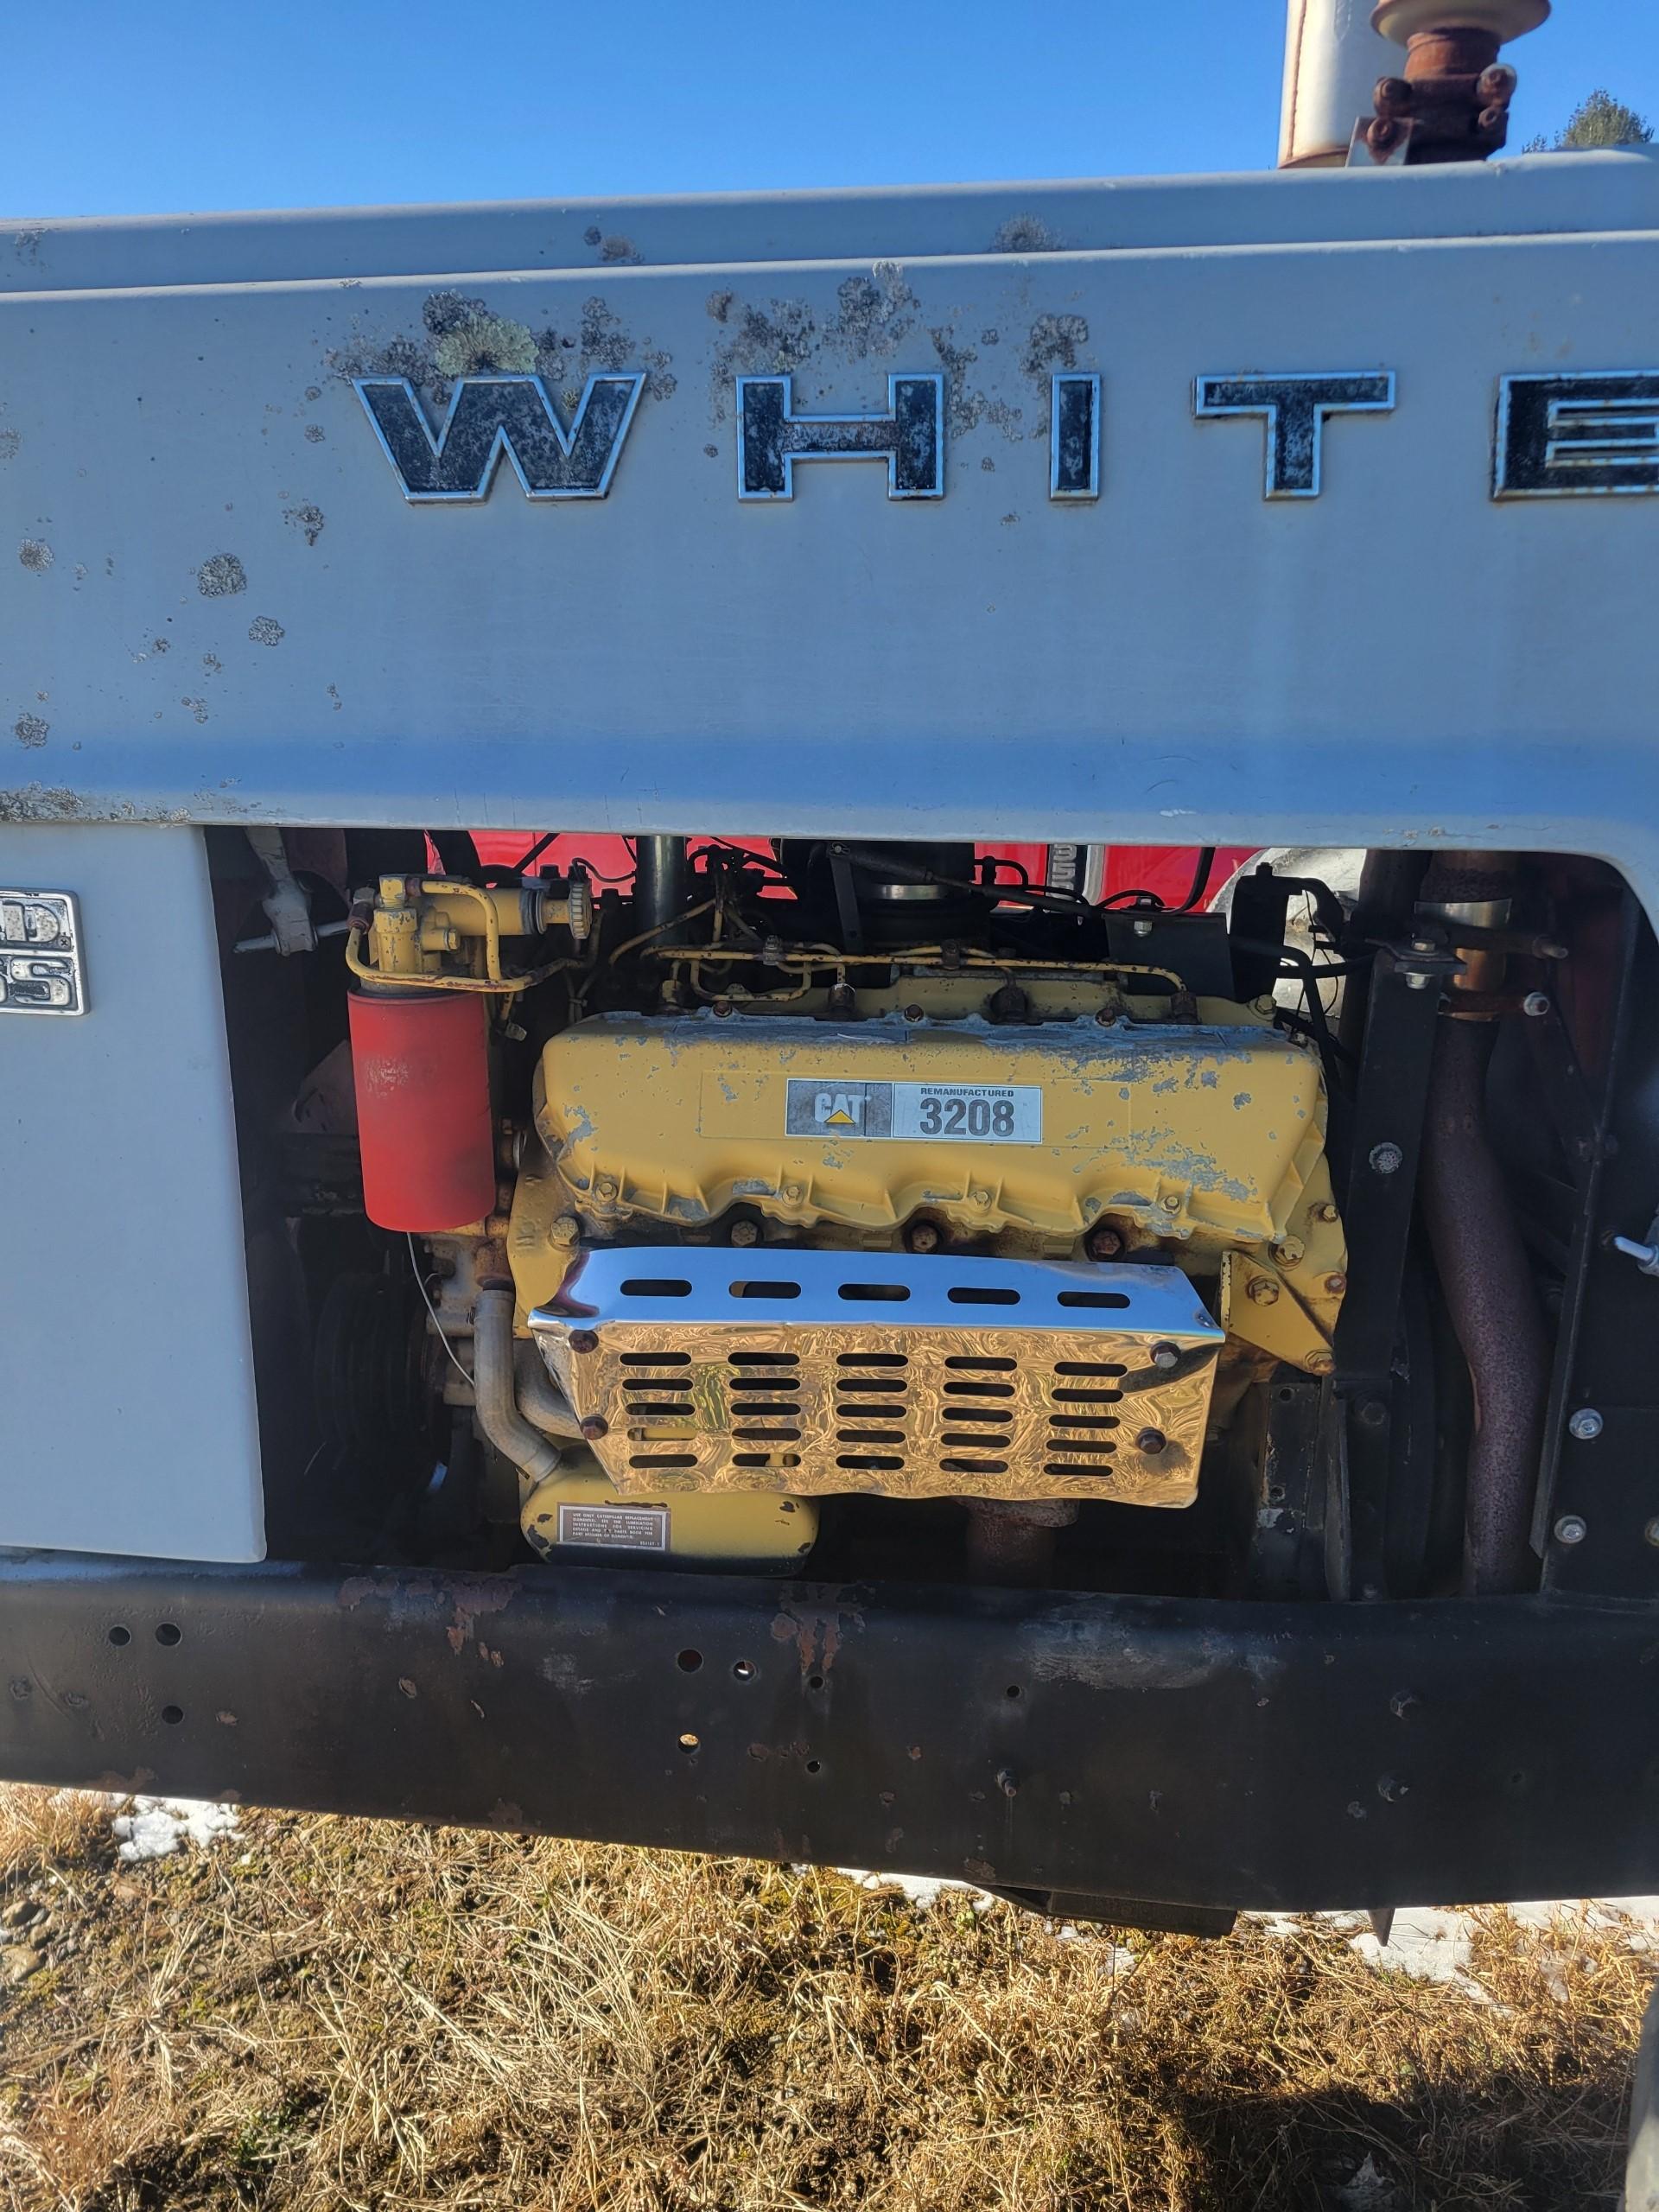 White 4-150 Tractor